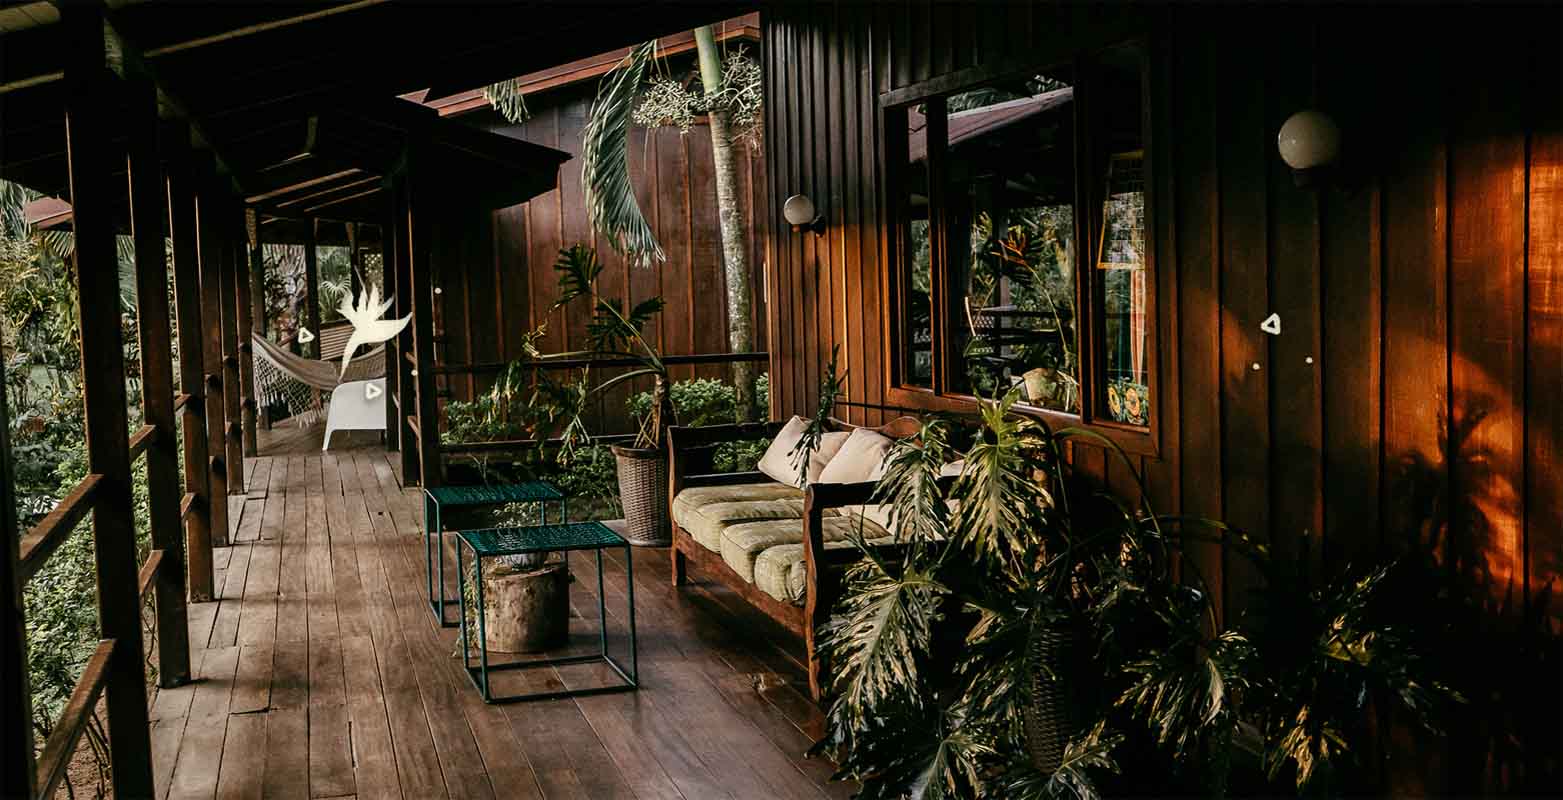  Mawamba Lodge   Un Lodge tropical en el medio del bosque lluvioso    Tortuguero, Costa Rica  